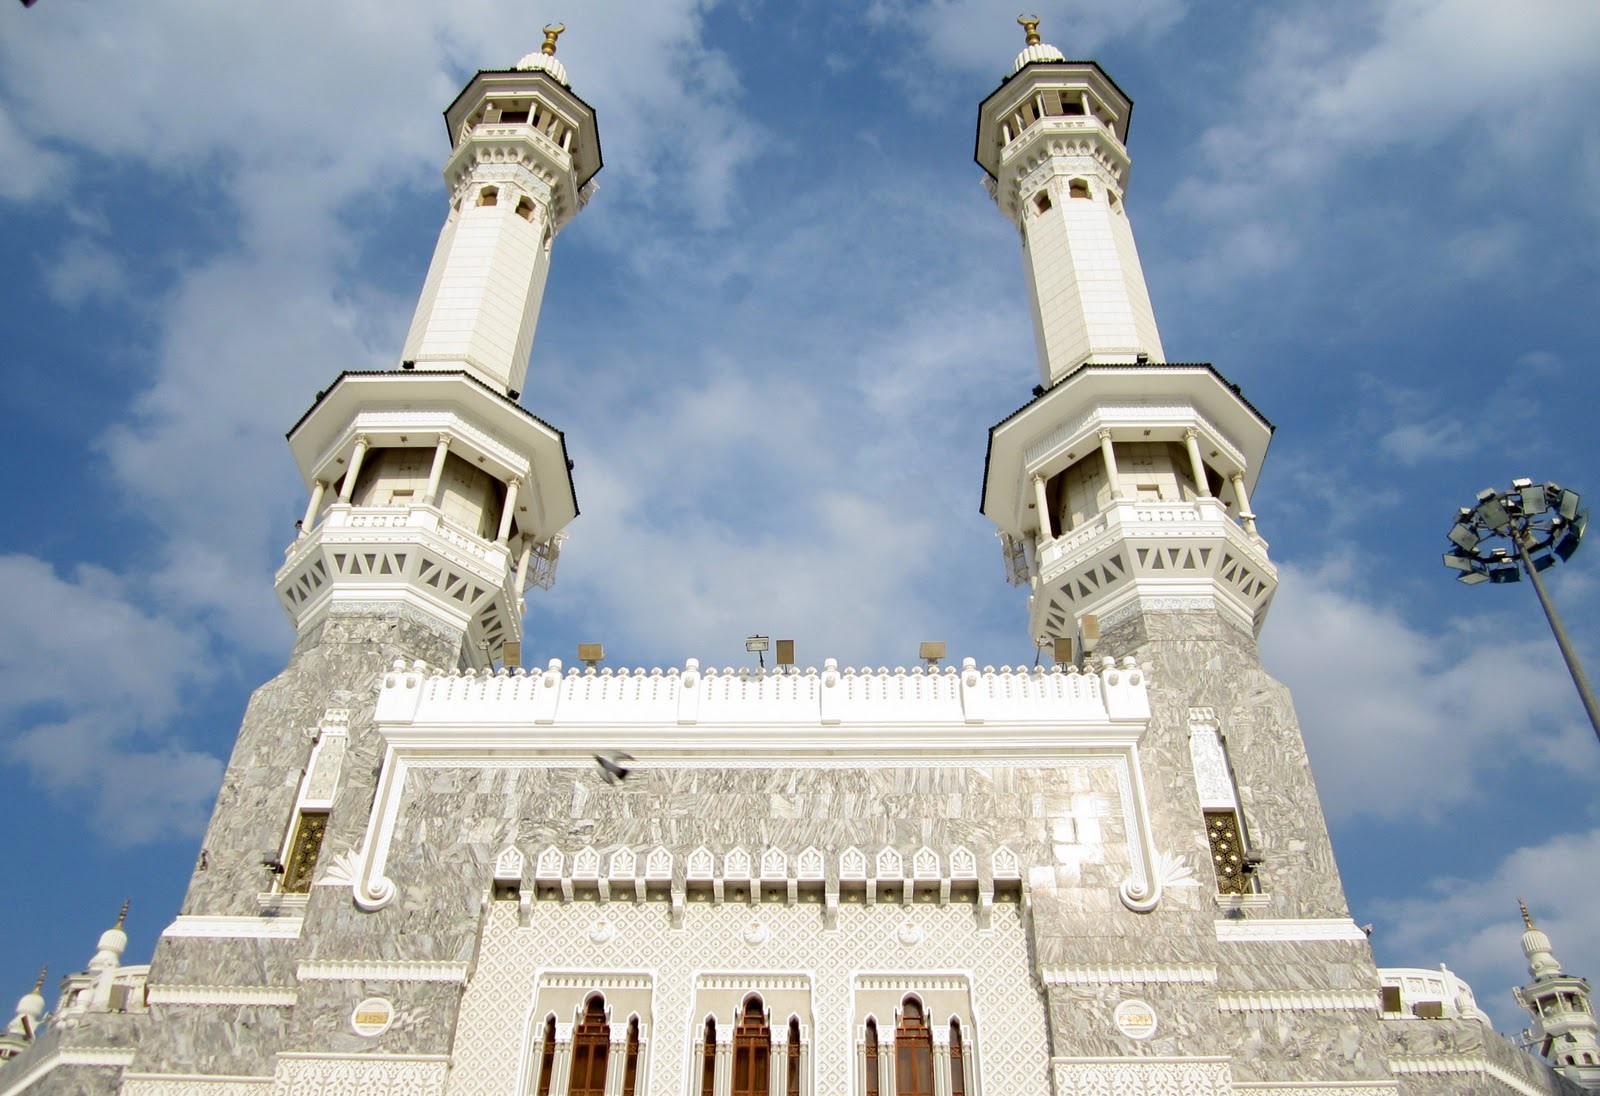 Masjid Al Haram HD Wallpapers 2013 - Articles about Islam